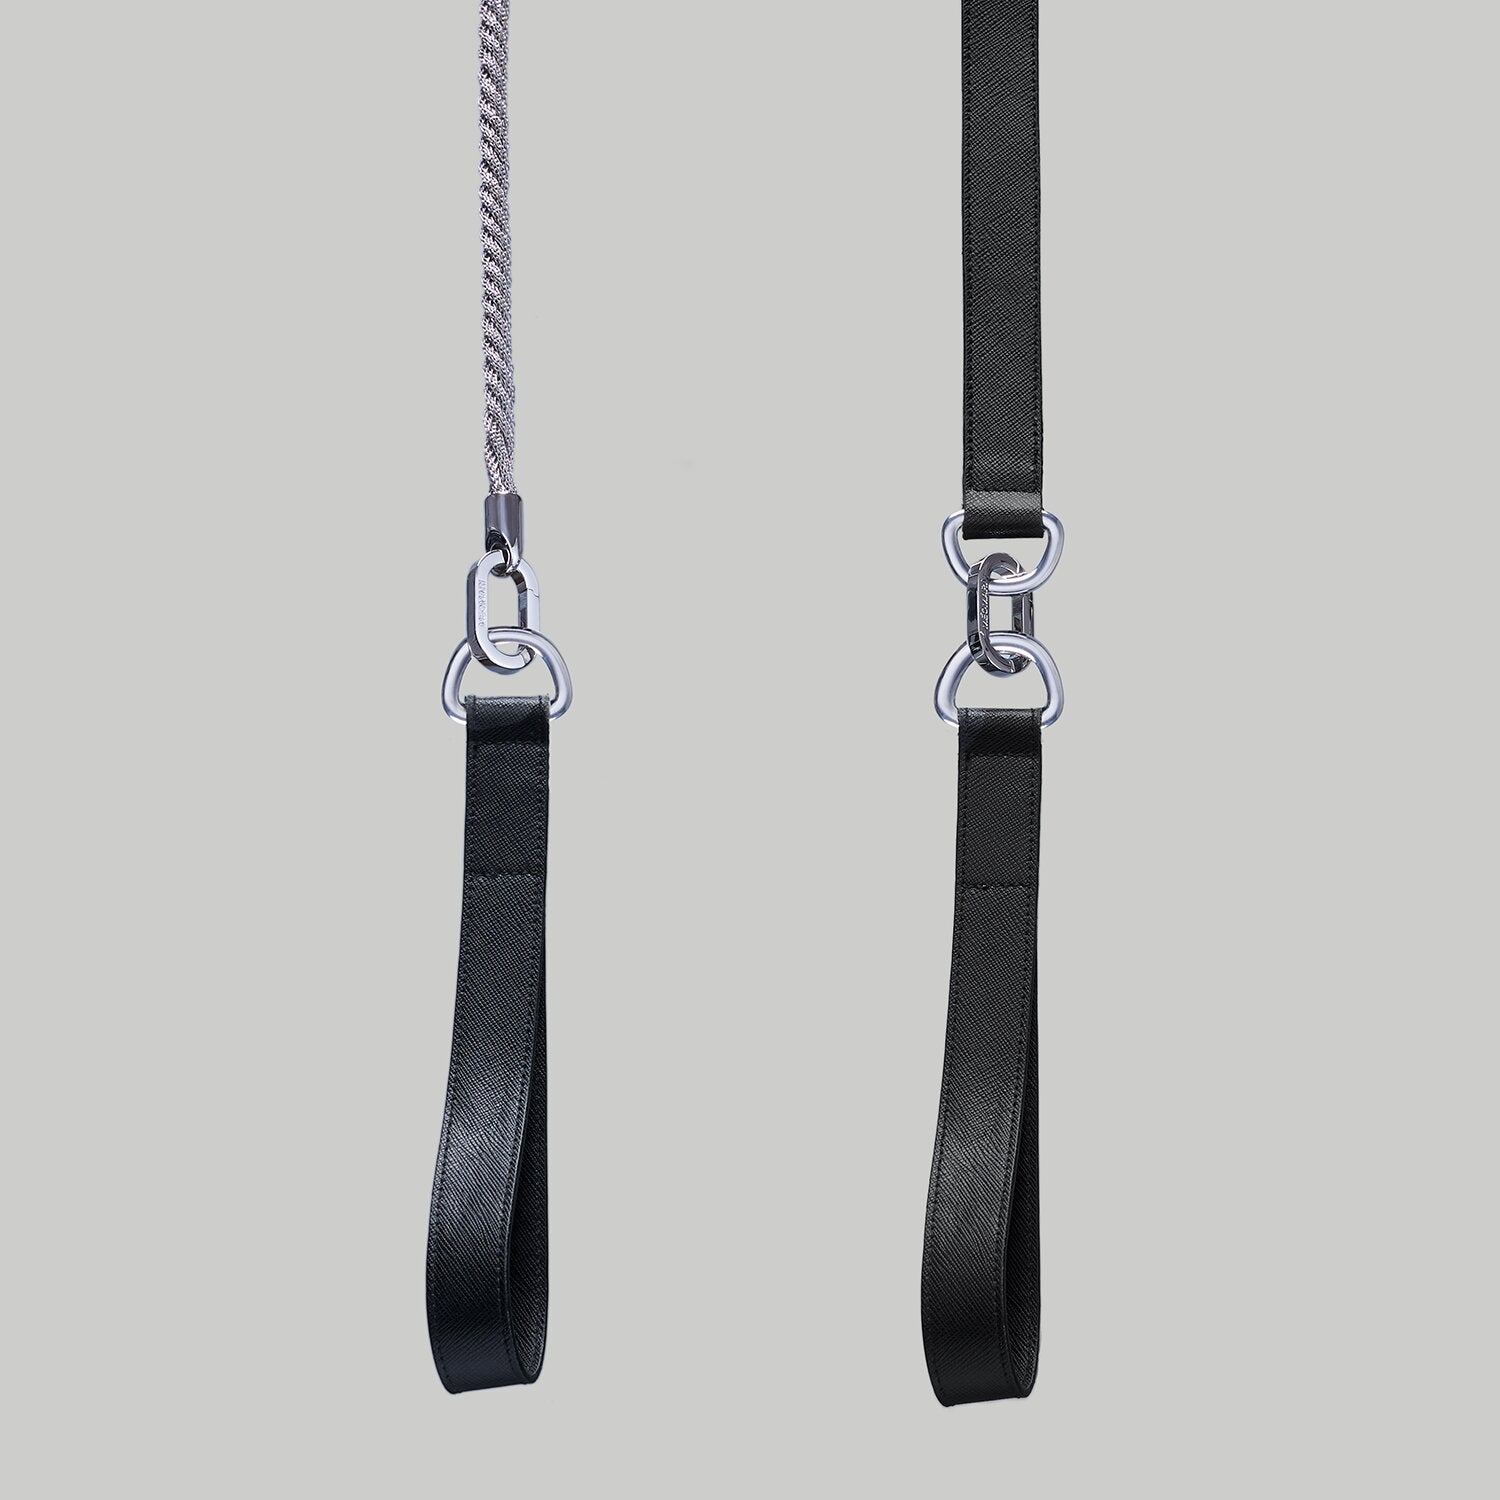 Luxury dog leash handle in black Saffiano leather with Palladium